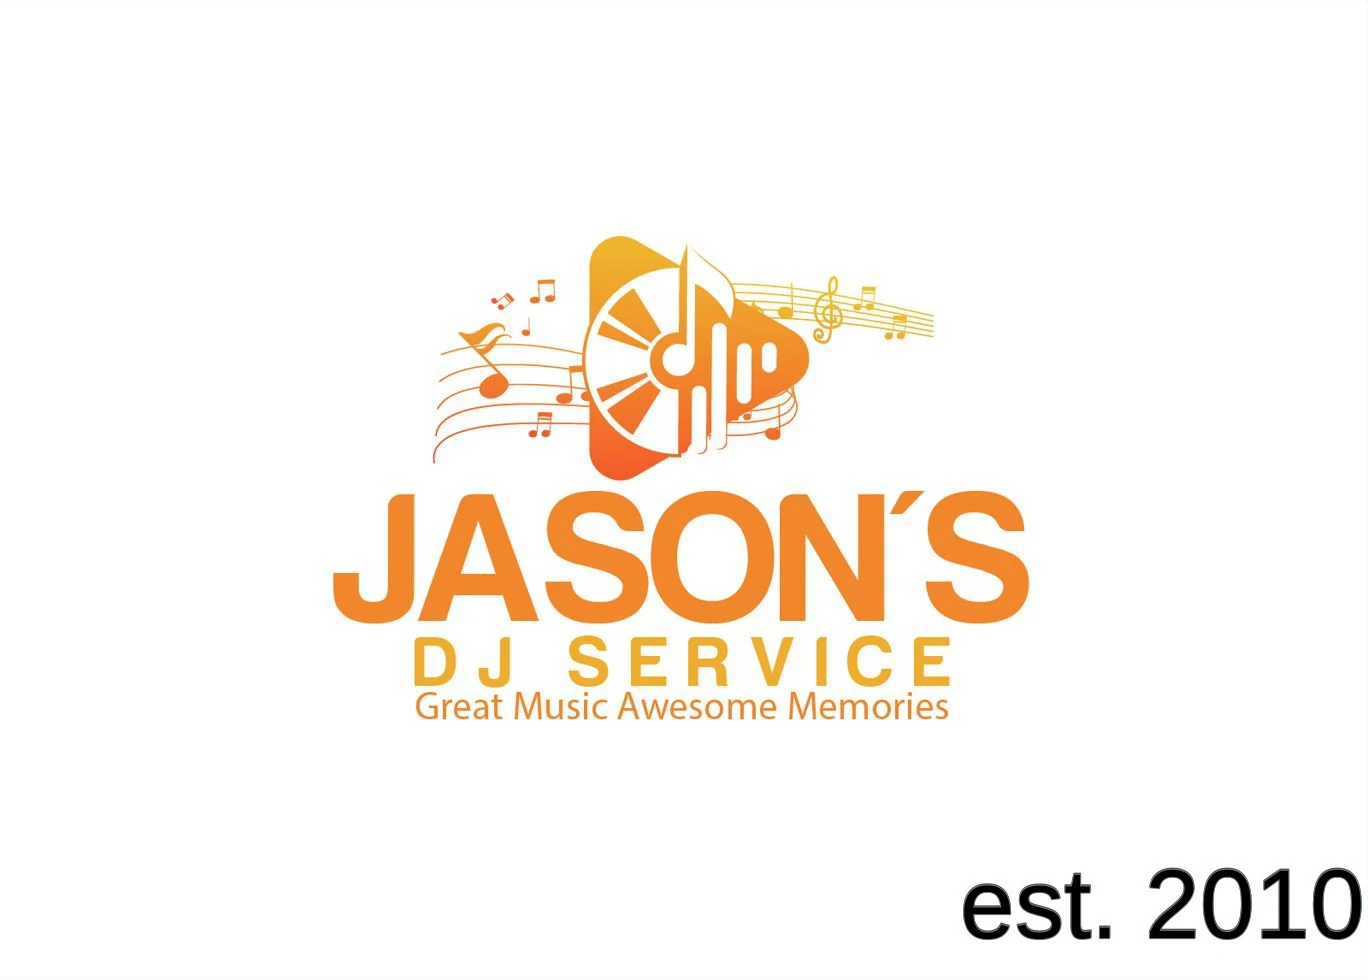 Jason's Dj Service